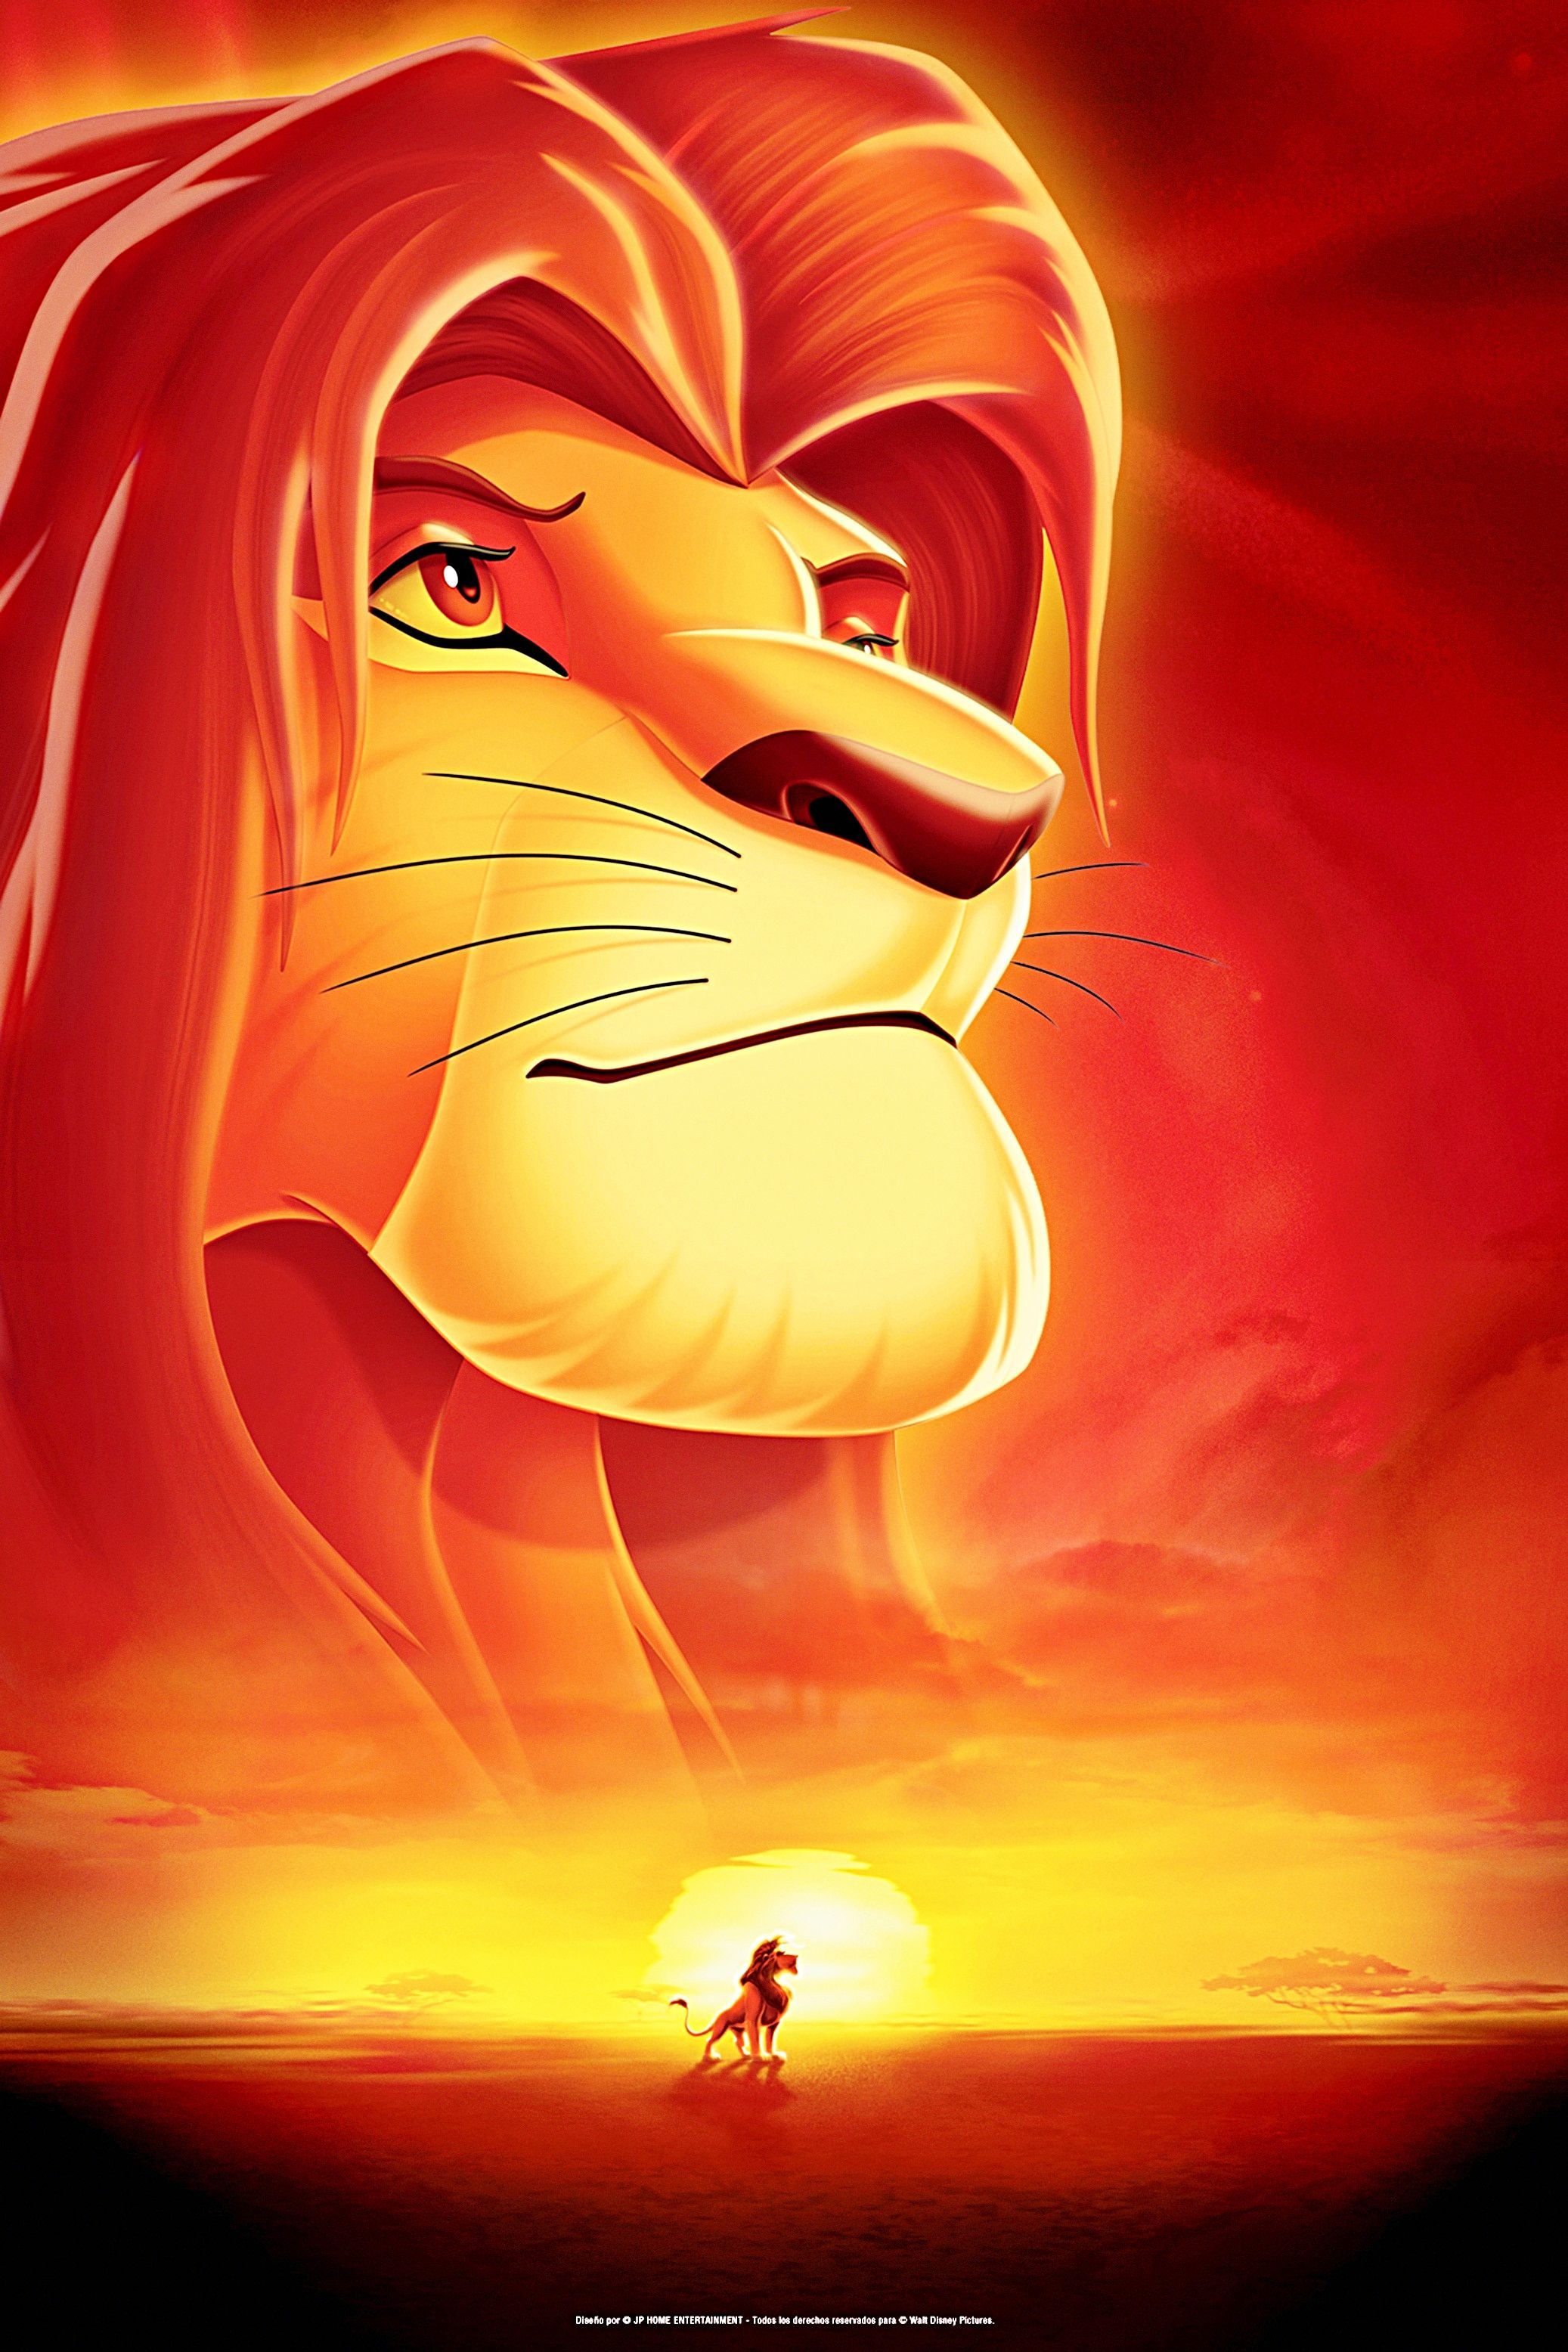 Walt Disney Posters Lion King. Walt Disney Poster of Simba